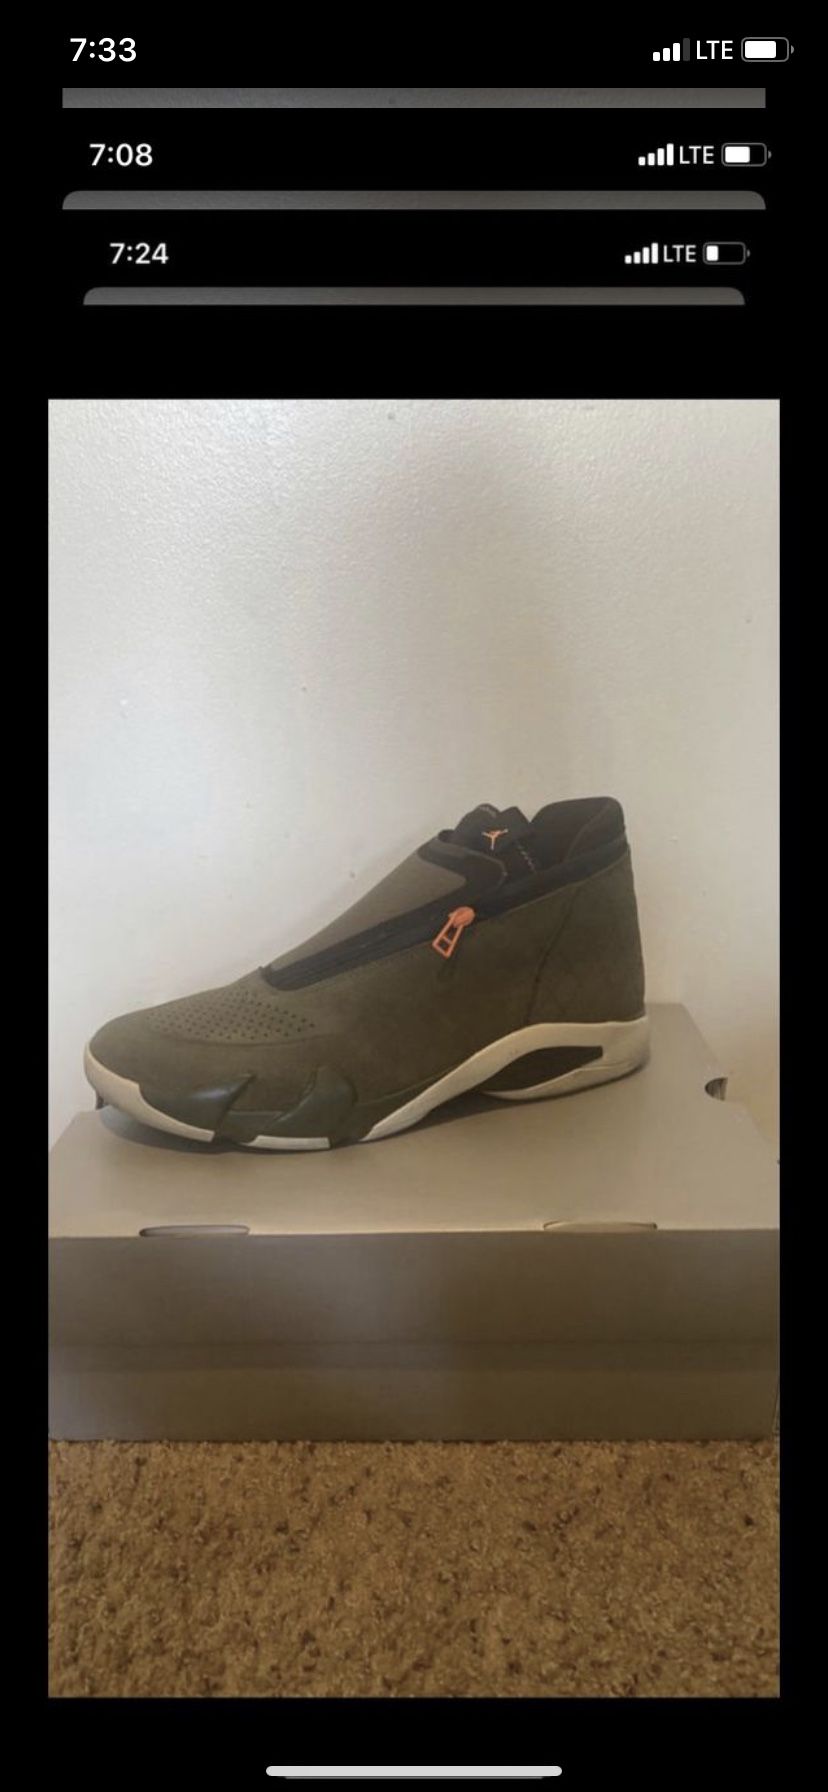 $100 Men’s Jordan’s size 13 worn once